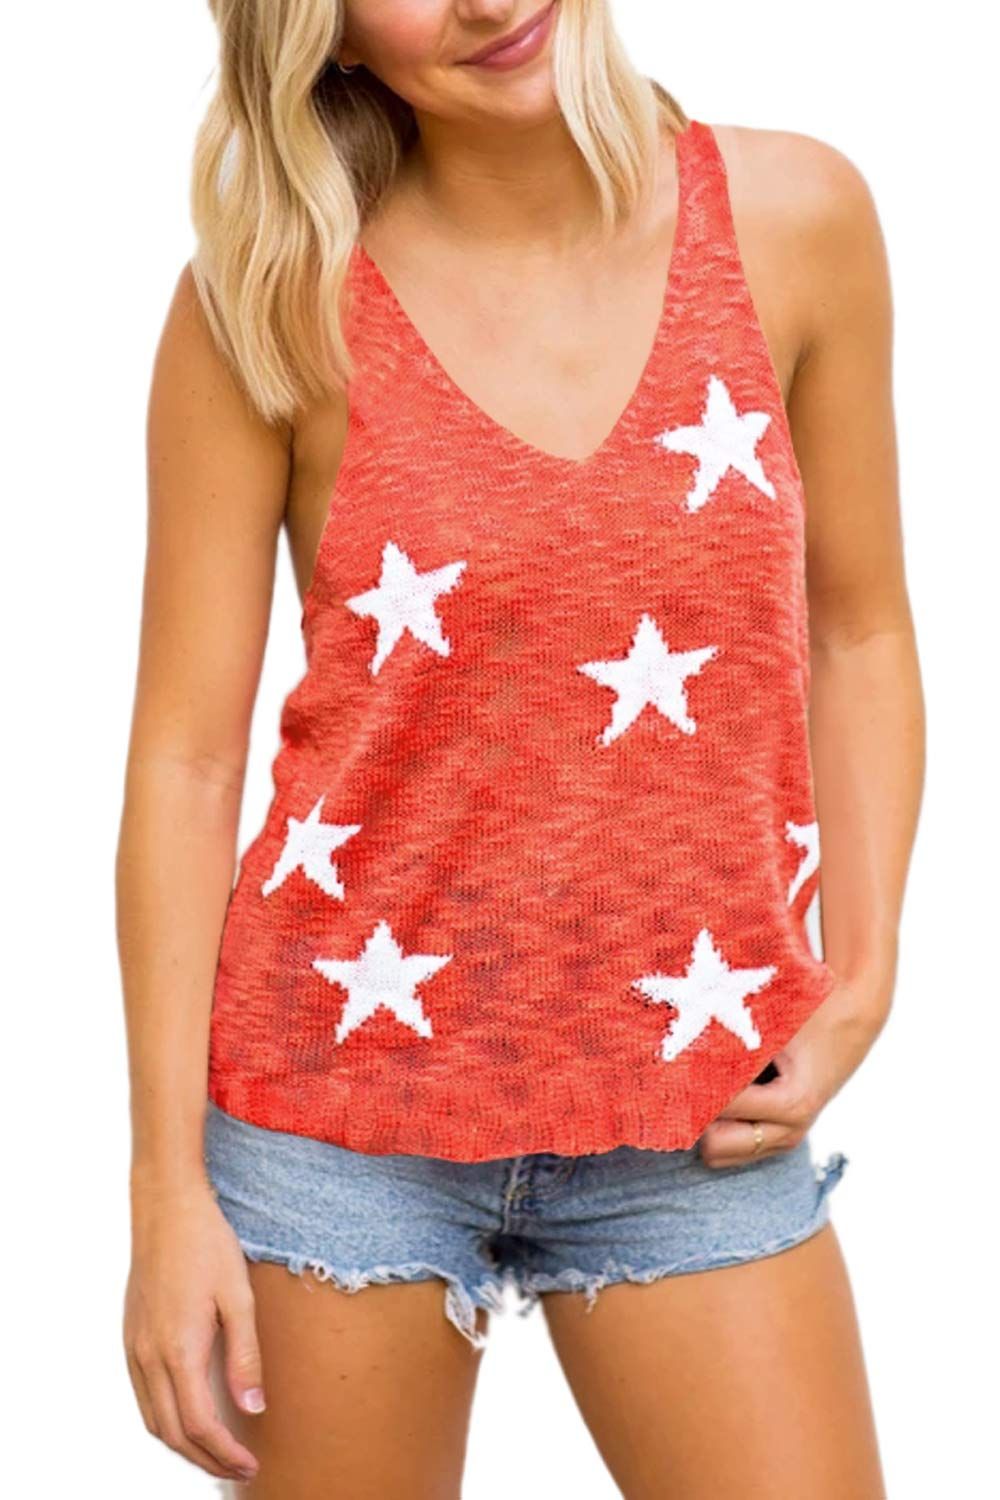 COCOLEGGINGS Summer Scoop Neck Knit Cami Tank Tops Loose Sleeveless Blouse Shirts | Amazon (US)